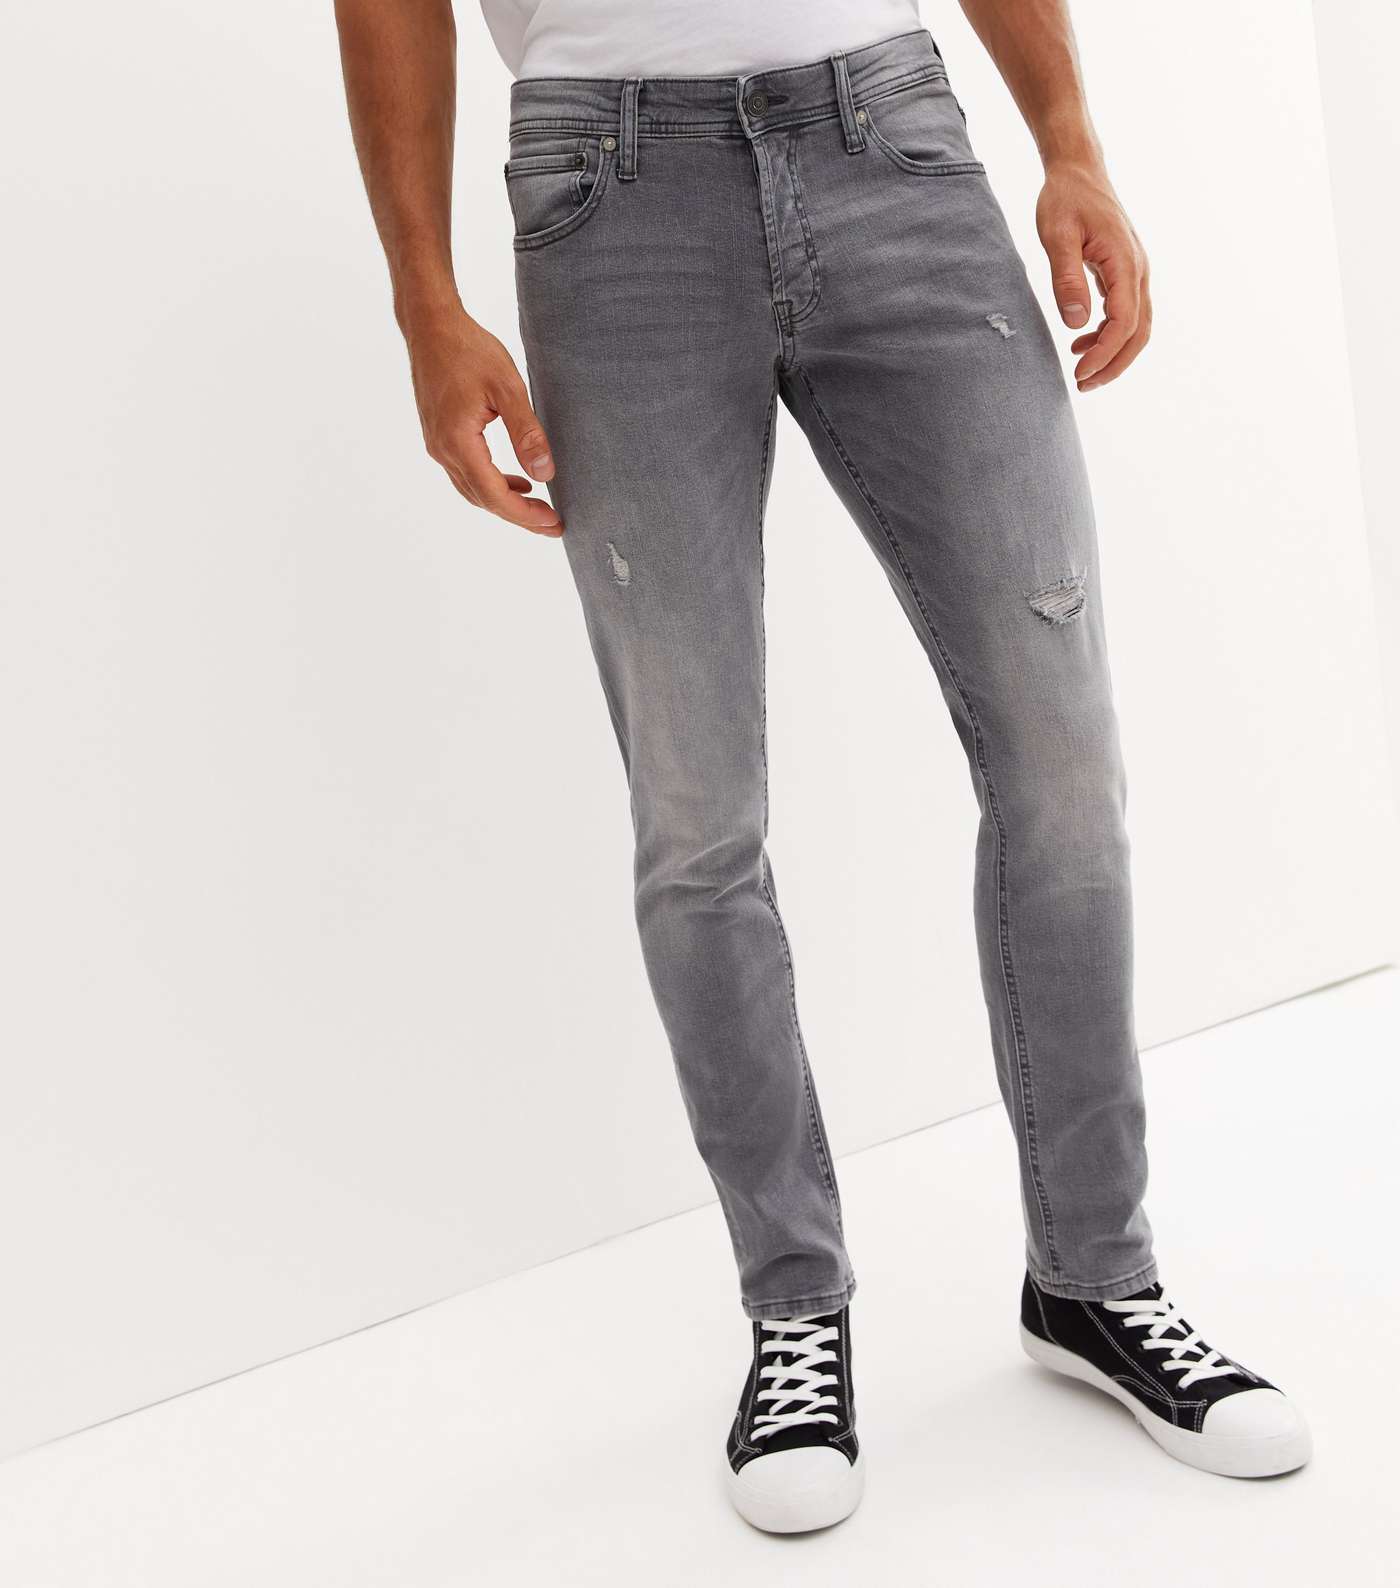 Jack & Jones Grey Ripped Slim Fit Jeans Image 2